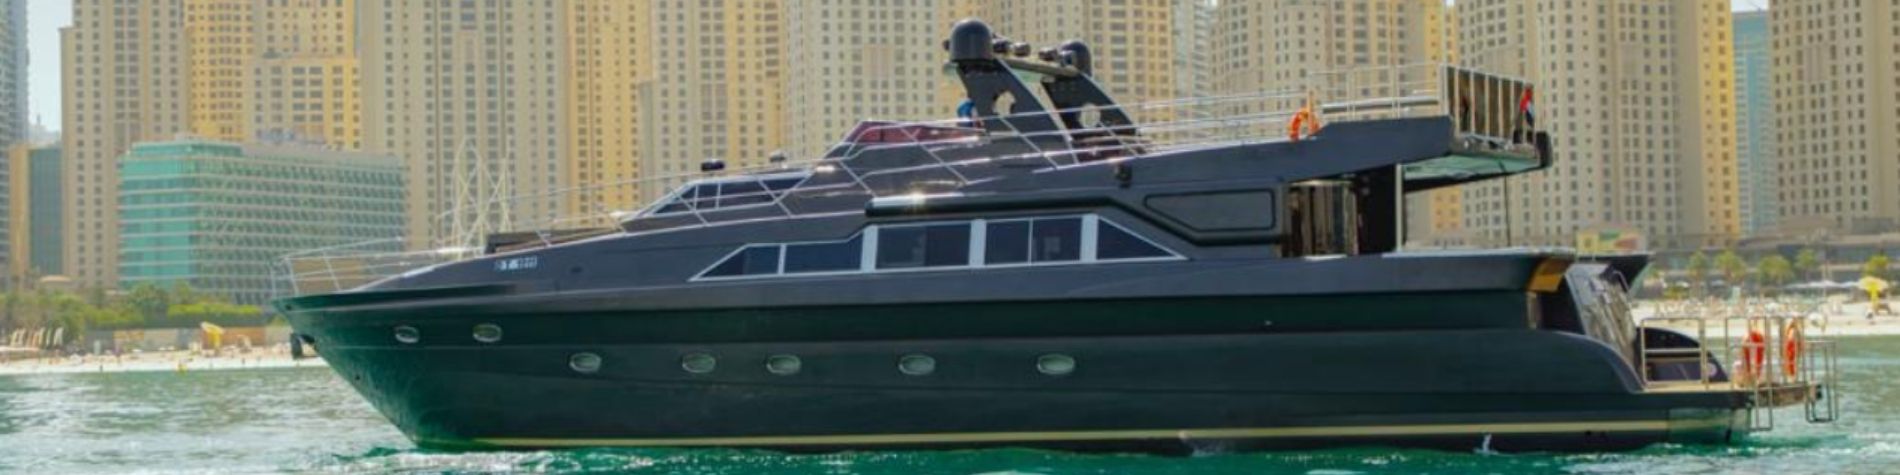 Gulf Craft 95 ft Yacht Rental in Dubai